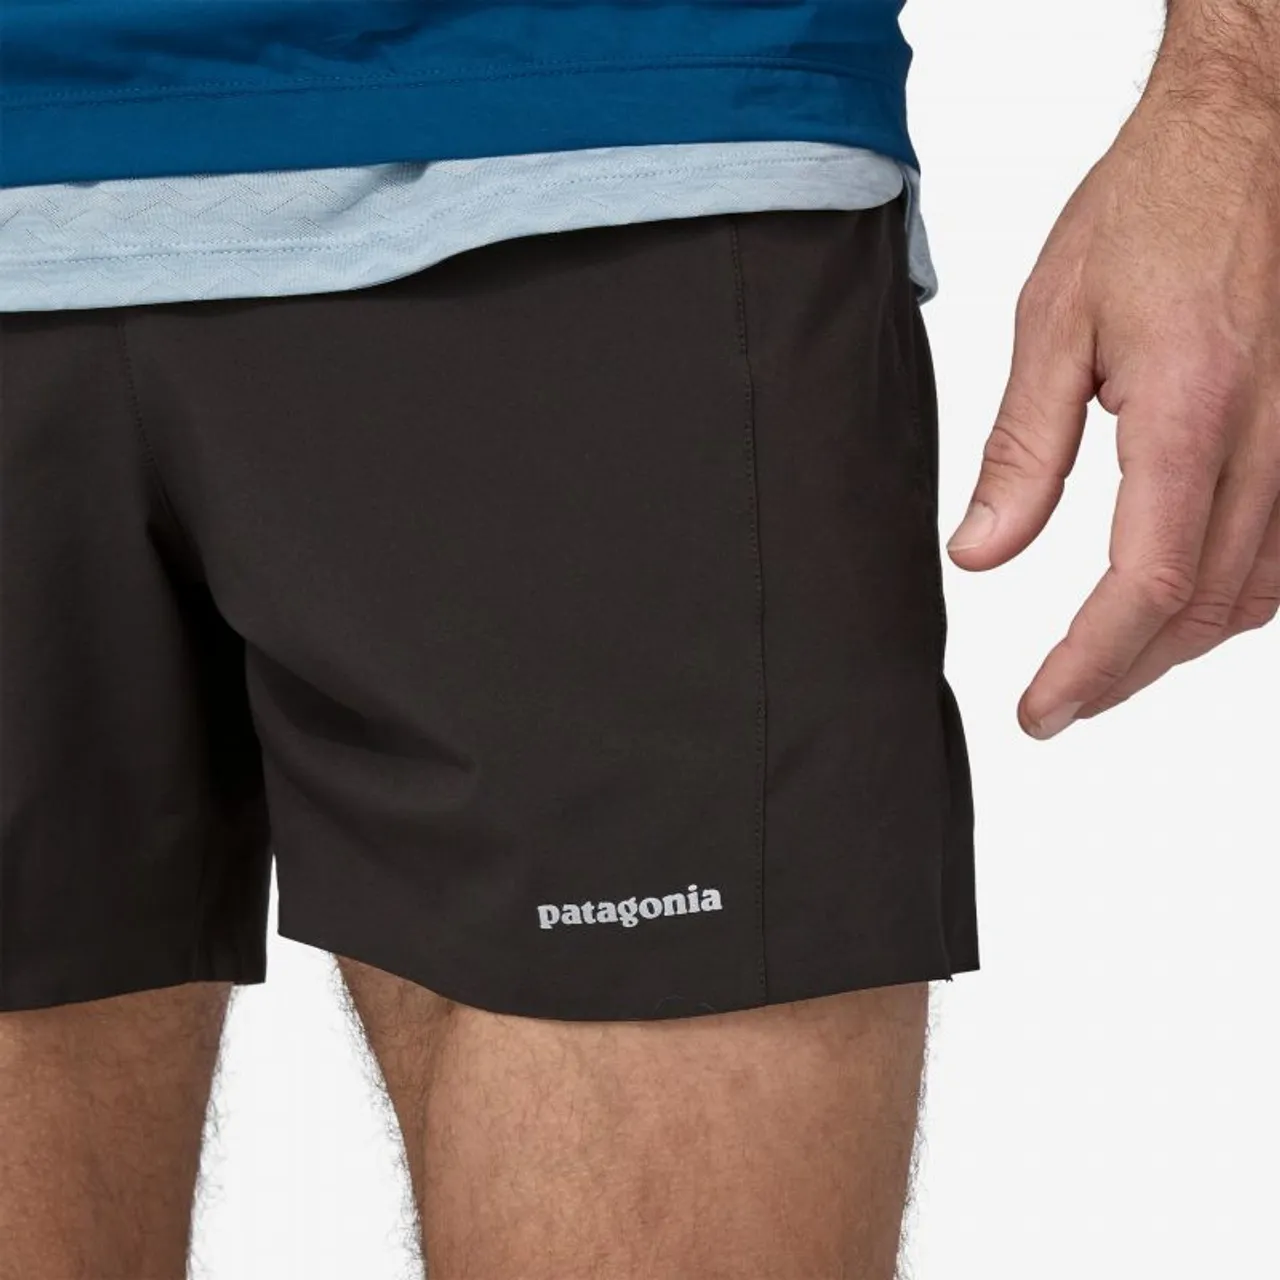 Patagonia M's Strider Pro Shorts - 5" - Trailrunning Shorts - Herren Black L - Inseam 5"